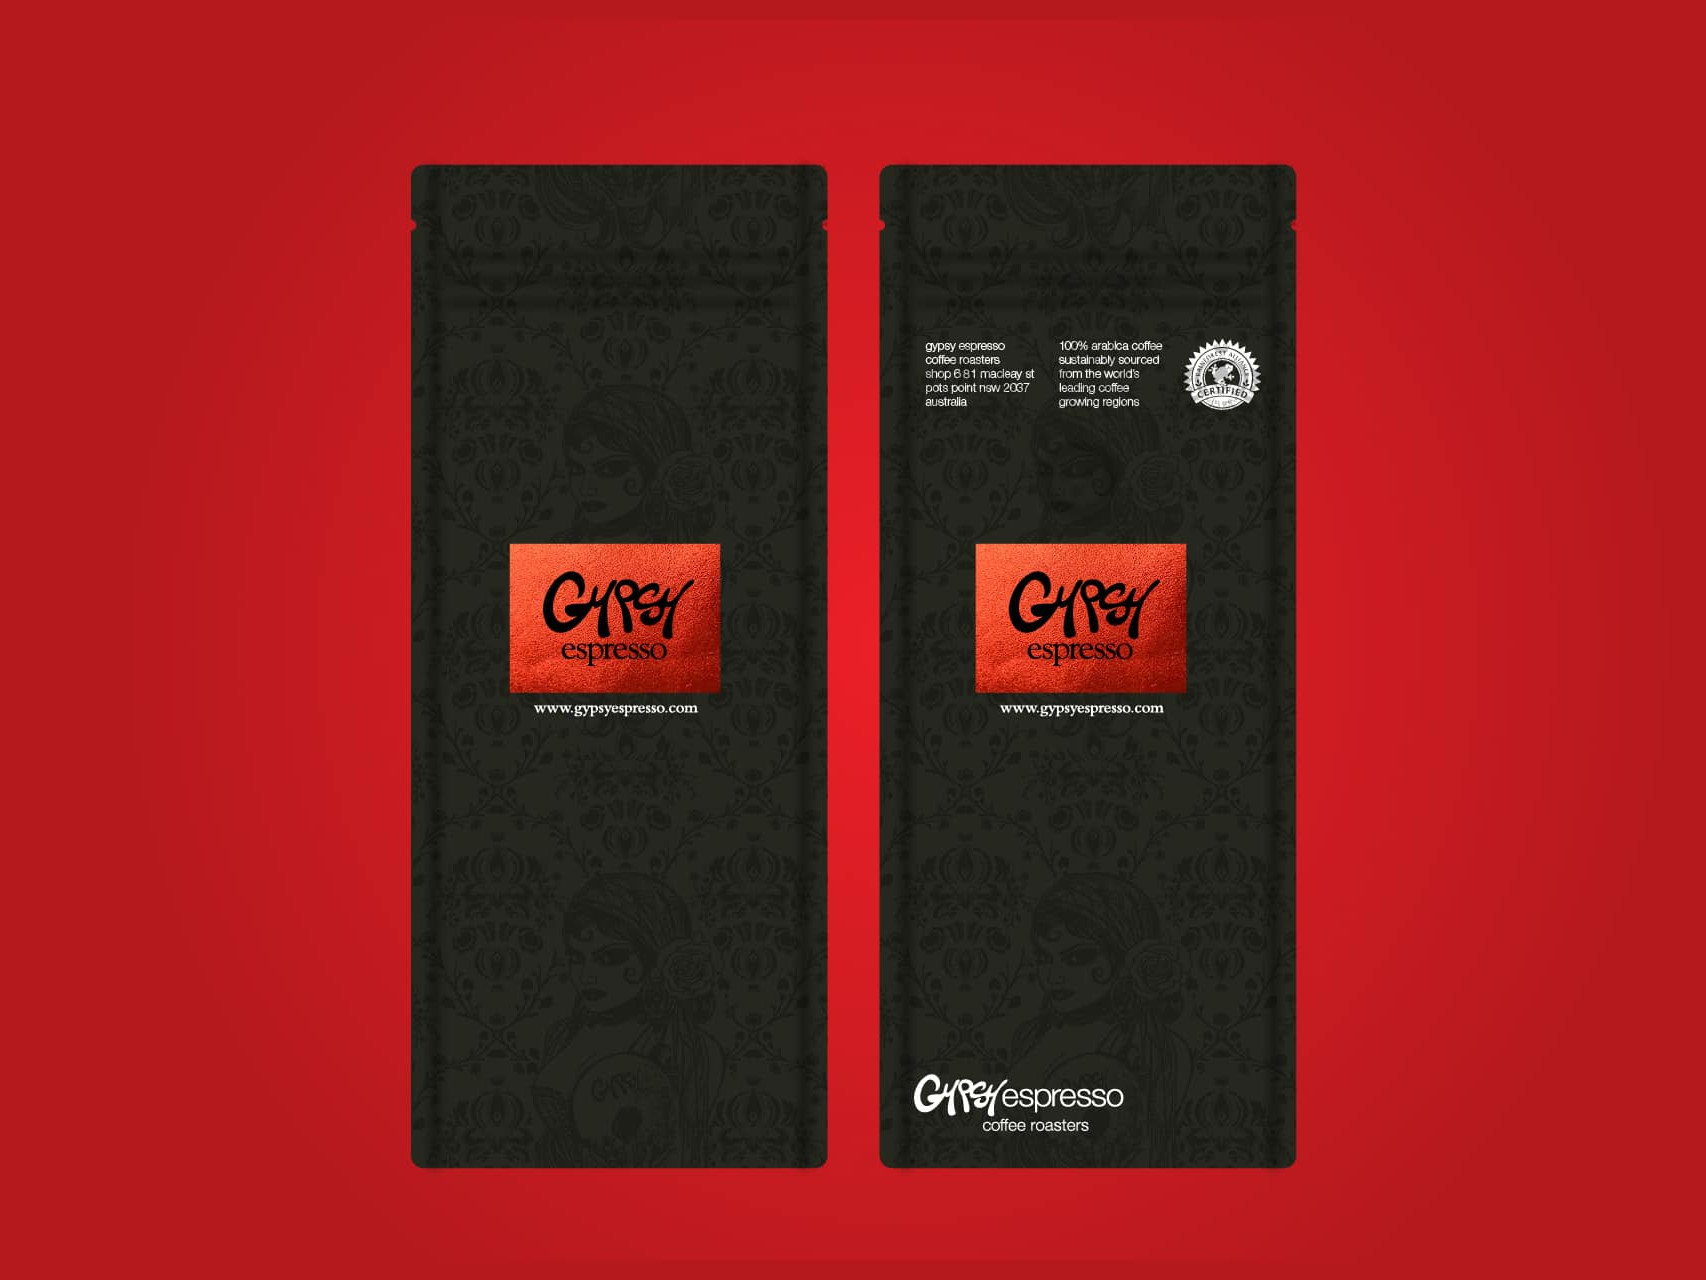 Gypsy Espresso Coffee Bag Design With Red Foil Block